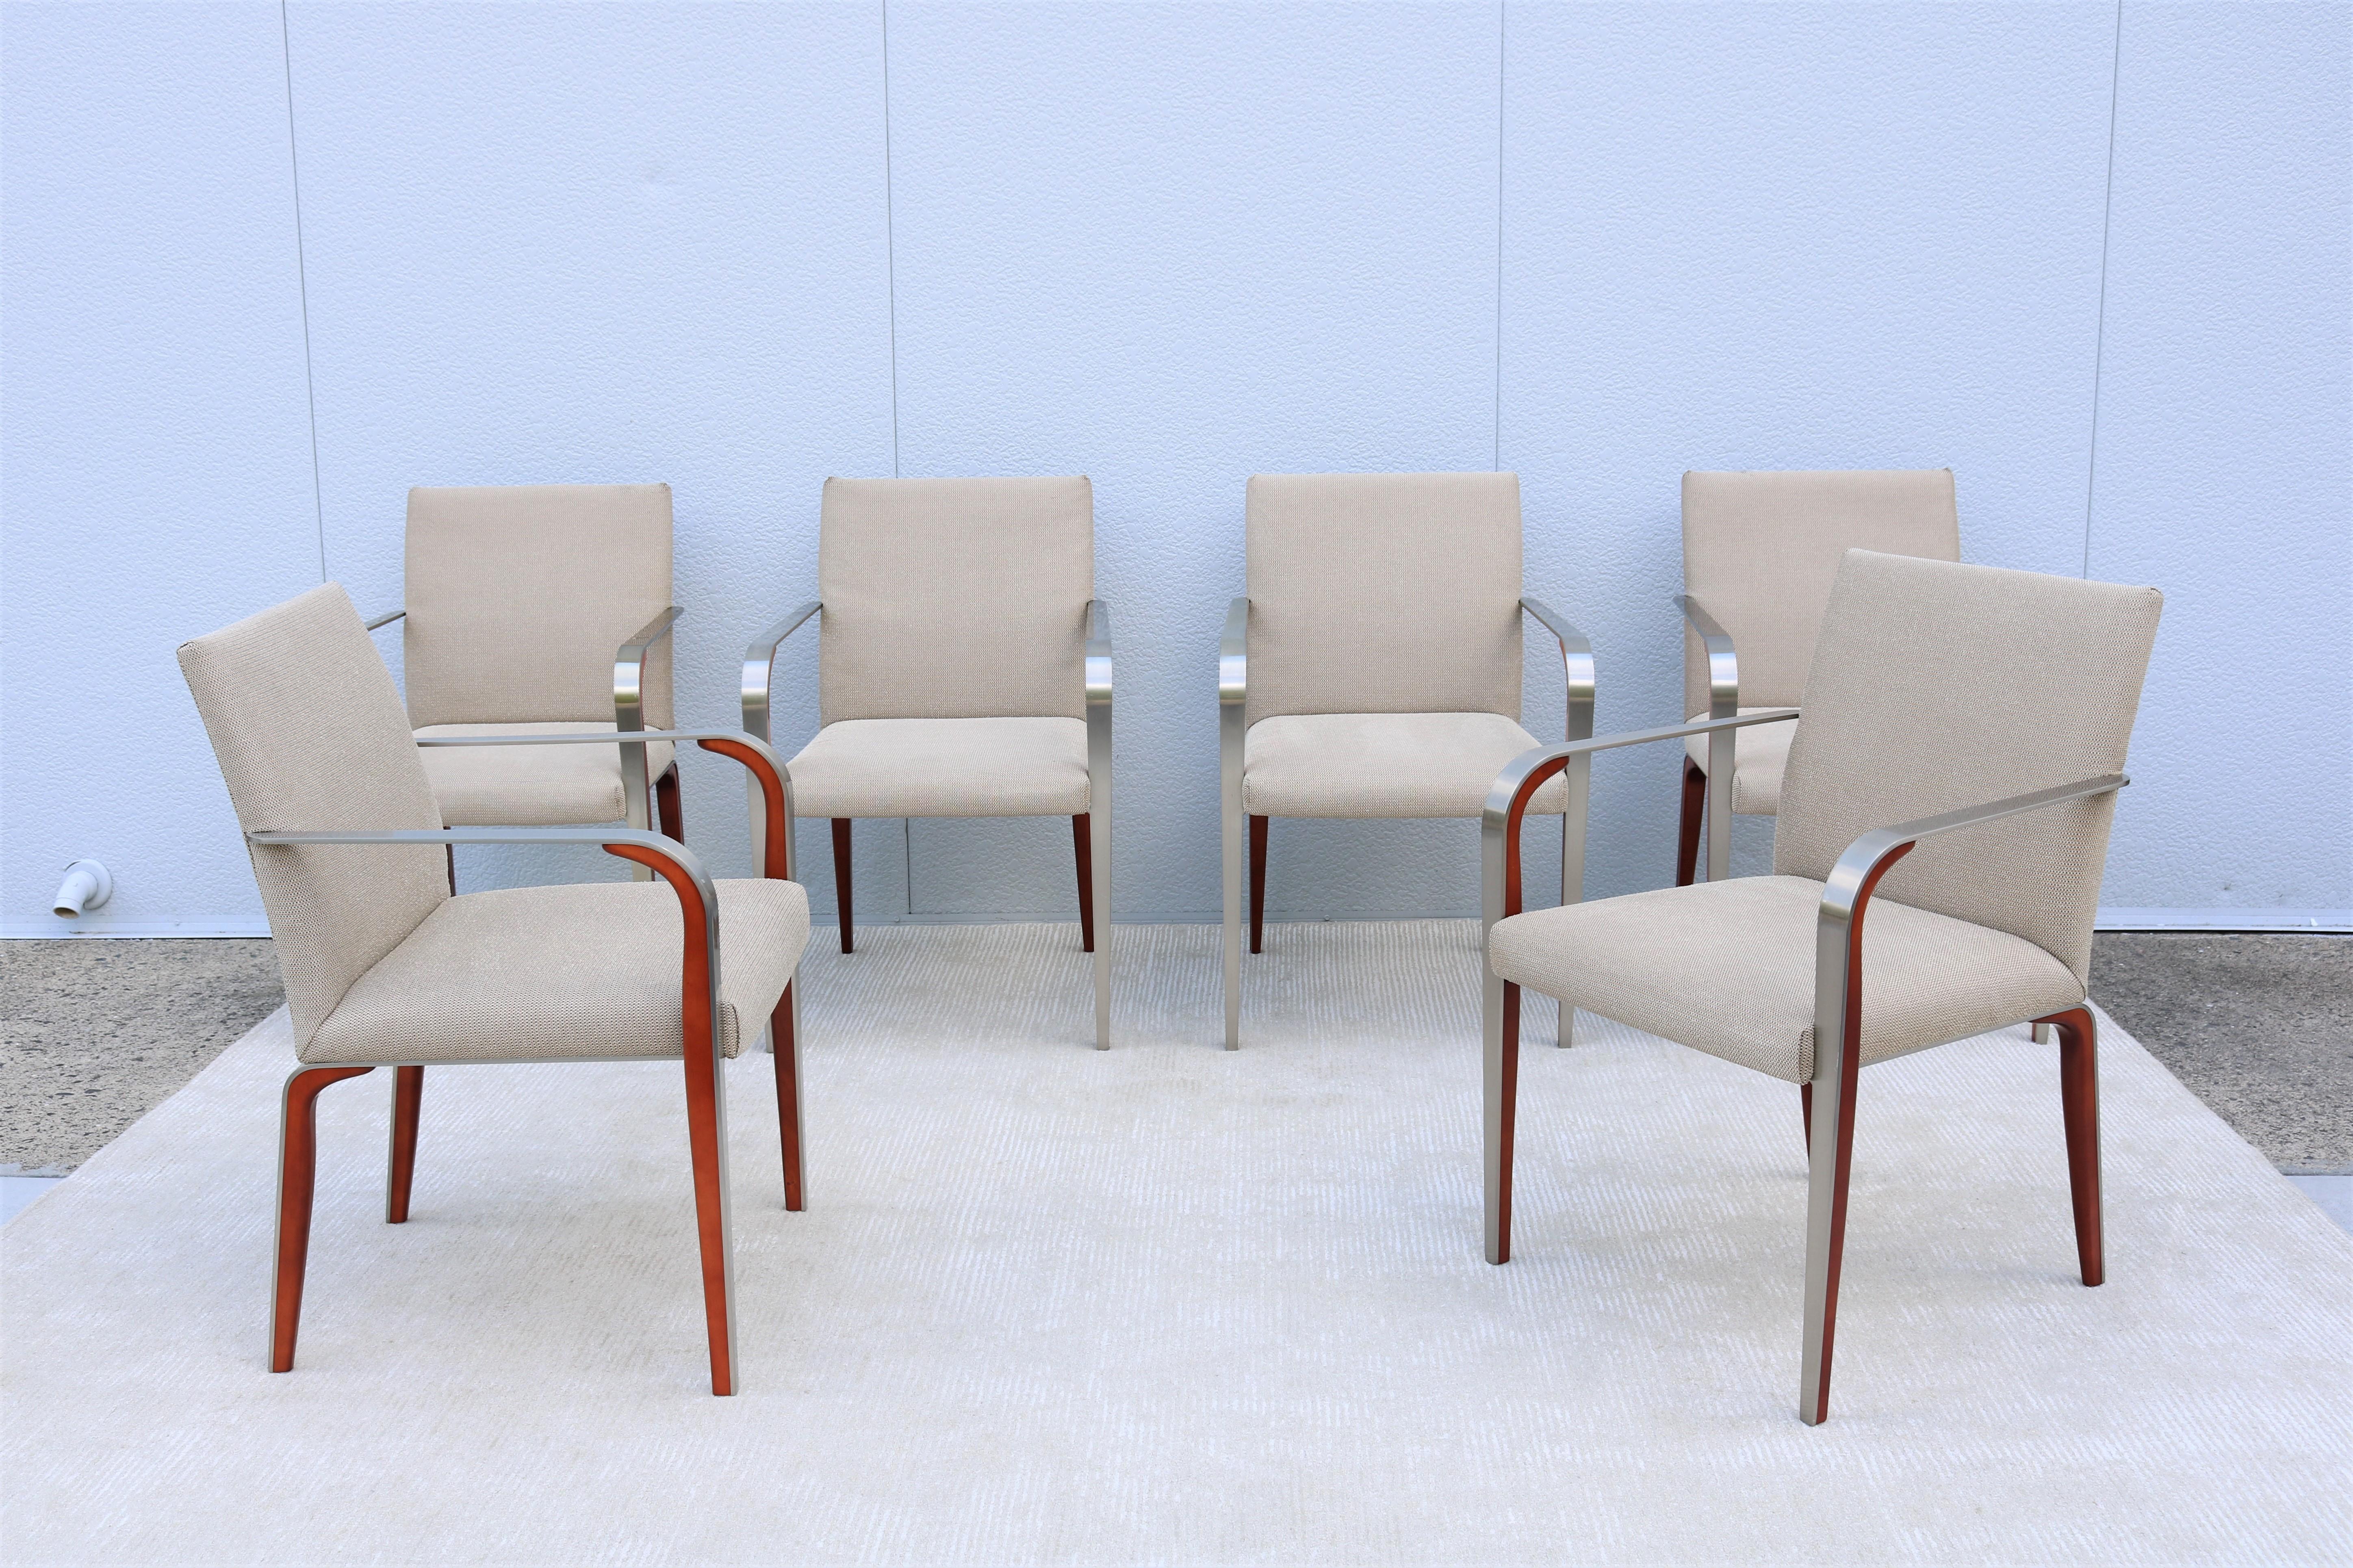 American Contemporary Modern Mark Goetz for Bernhardt Design Aria Armchairs - Set of 6